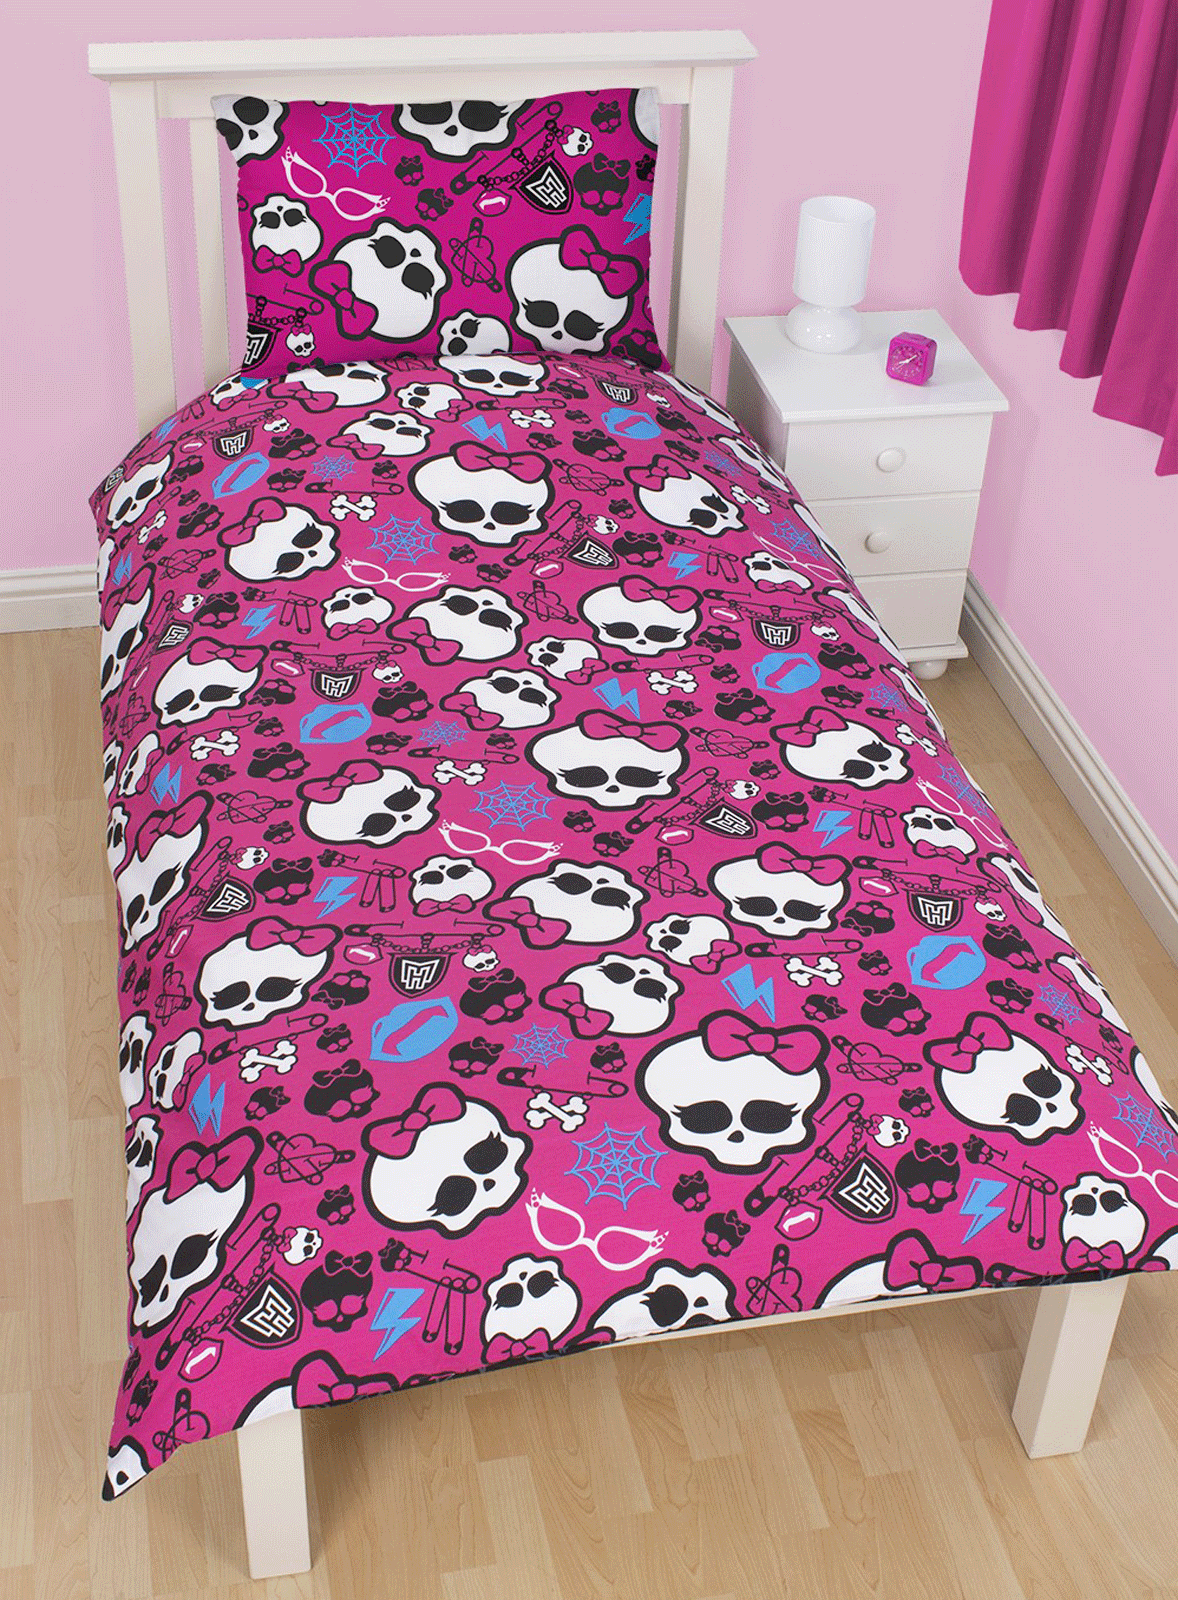 28 Where To Buy Monster High Bedding Set Amazon Com Monster